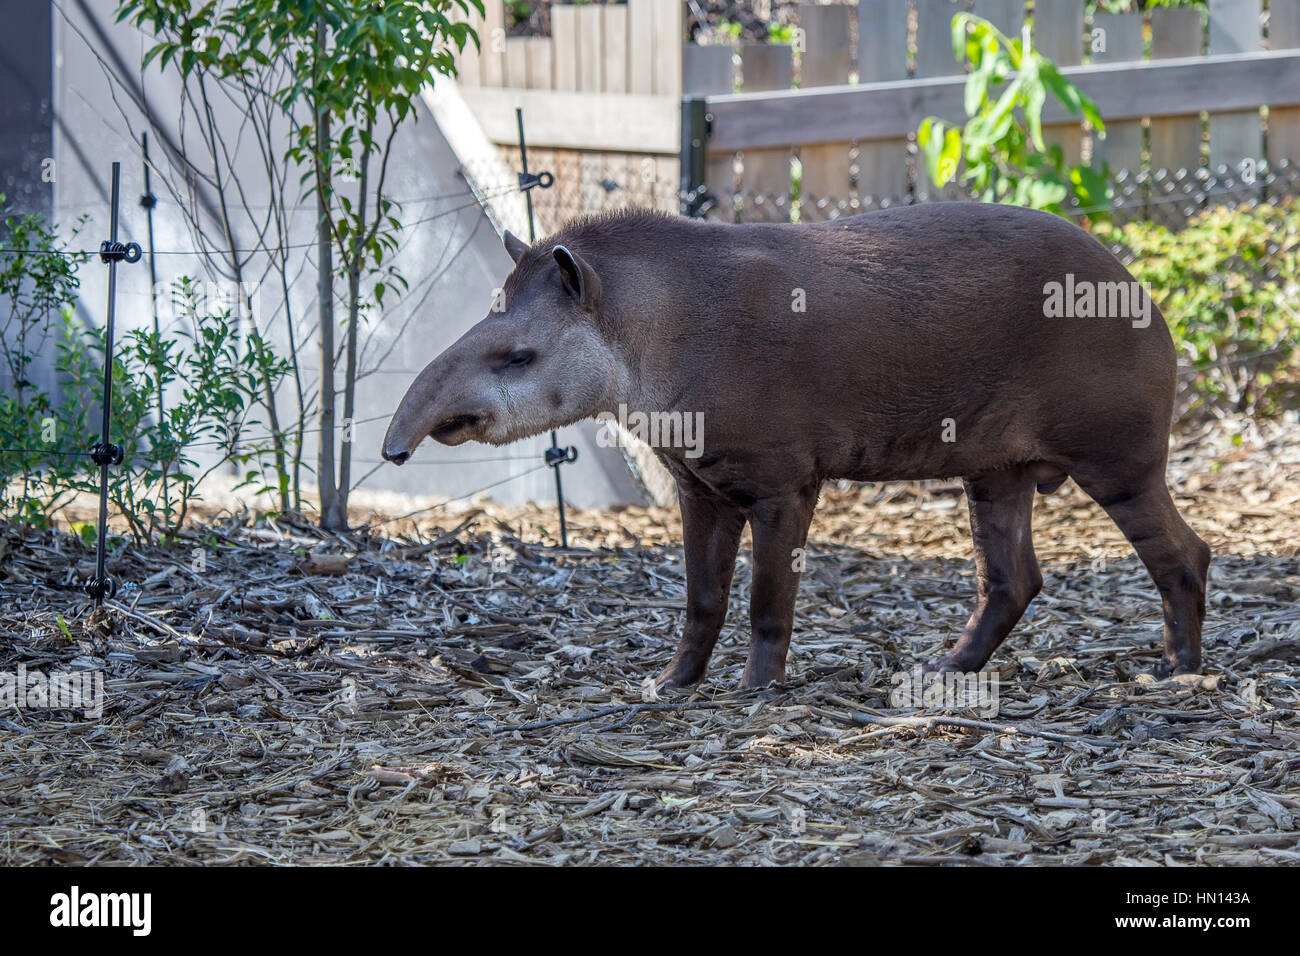 South American tapir or Tapirus terrestris also known as the Brazilian tapir Stock Photo